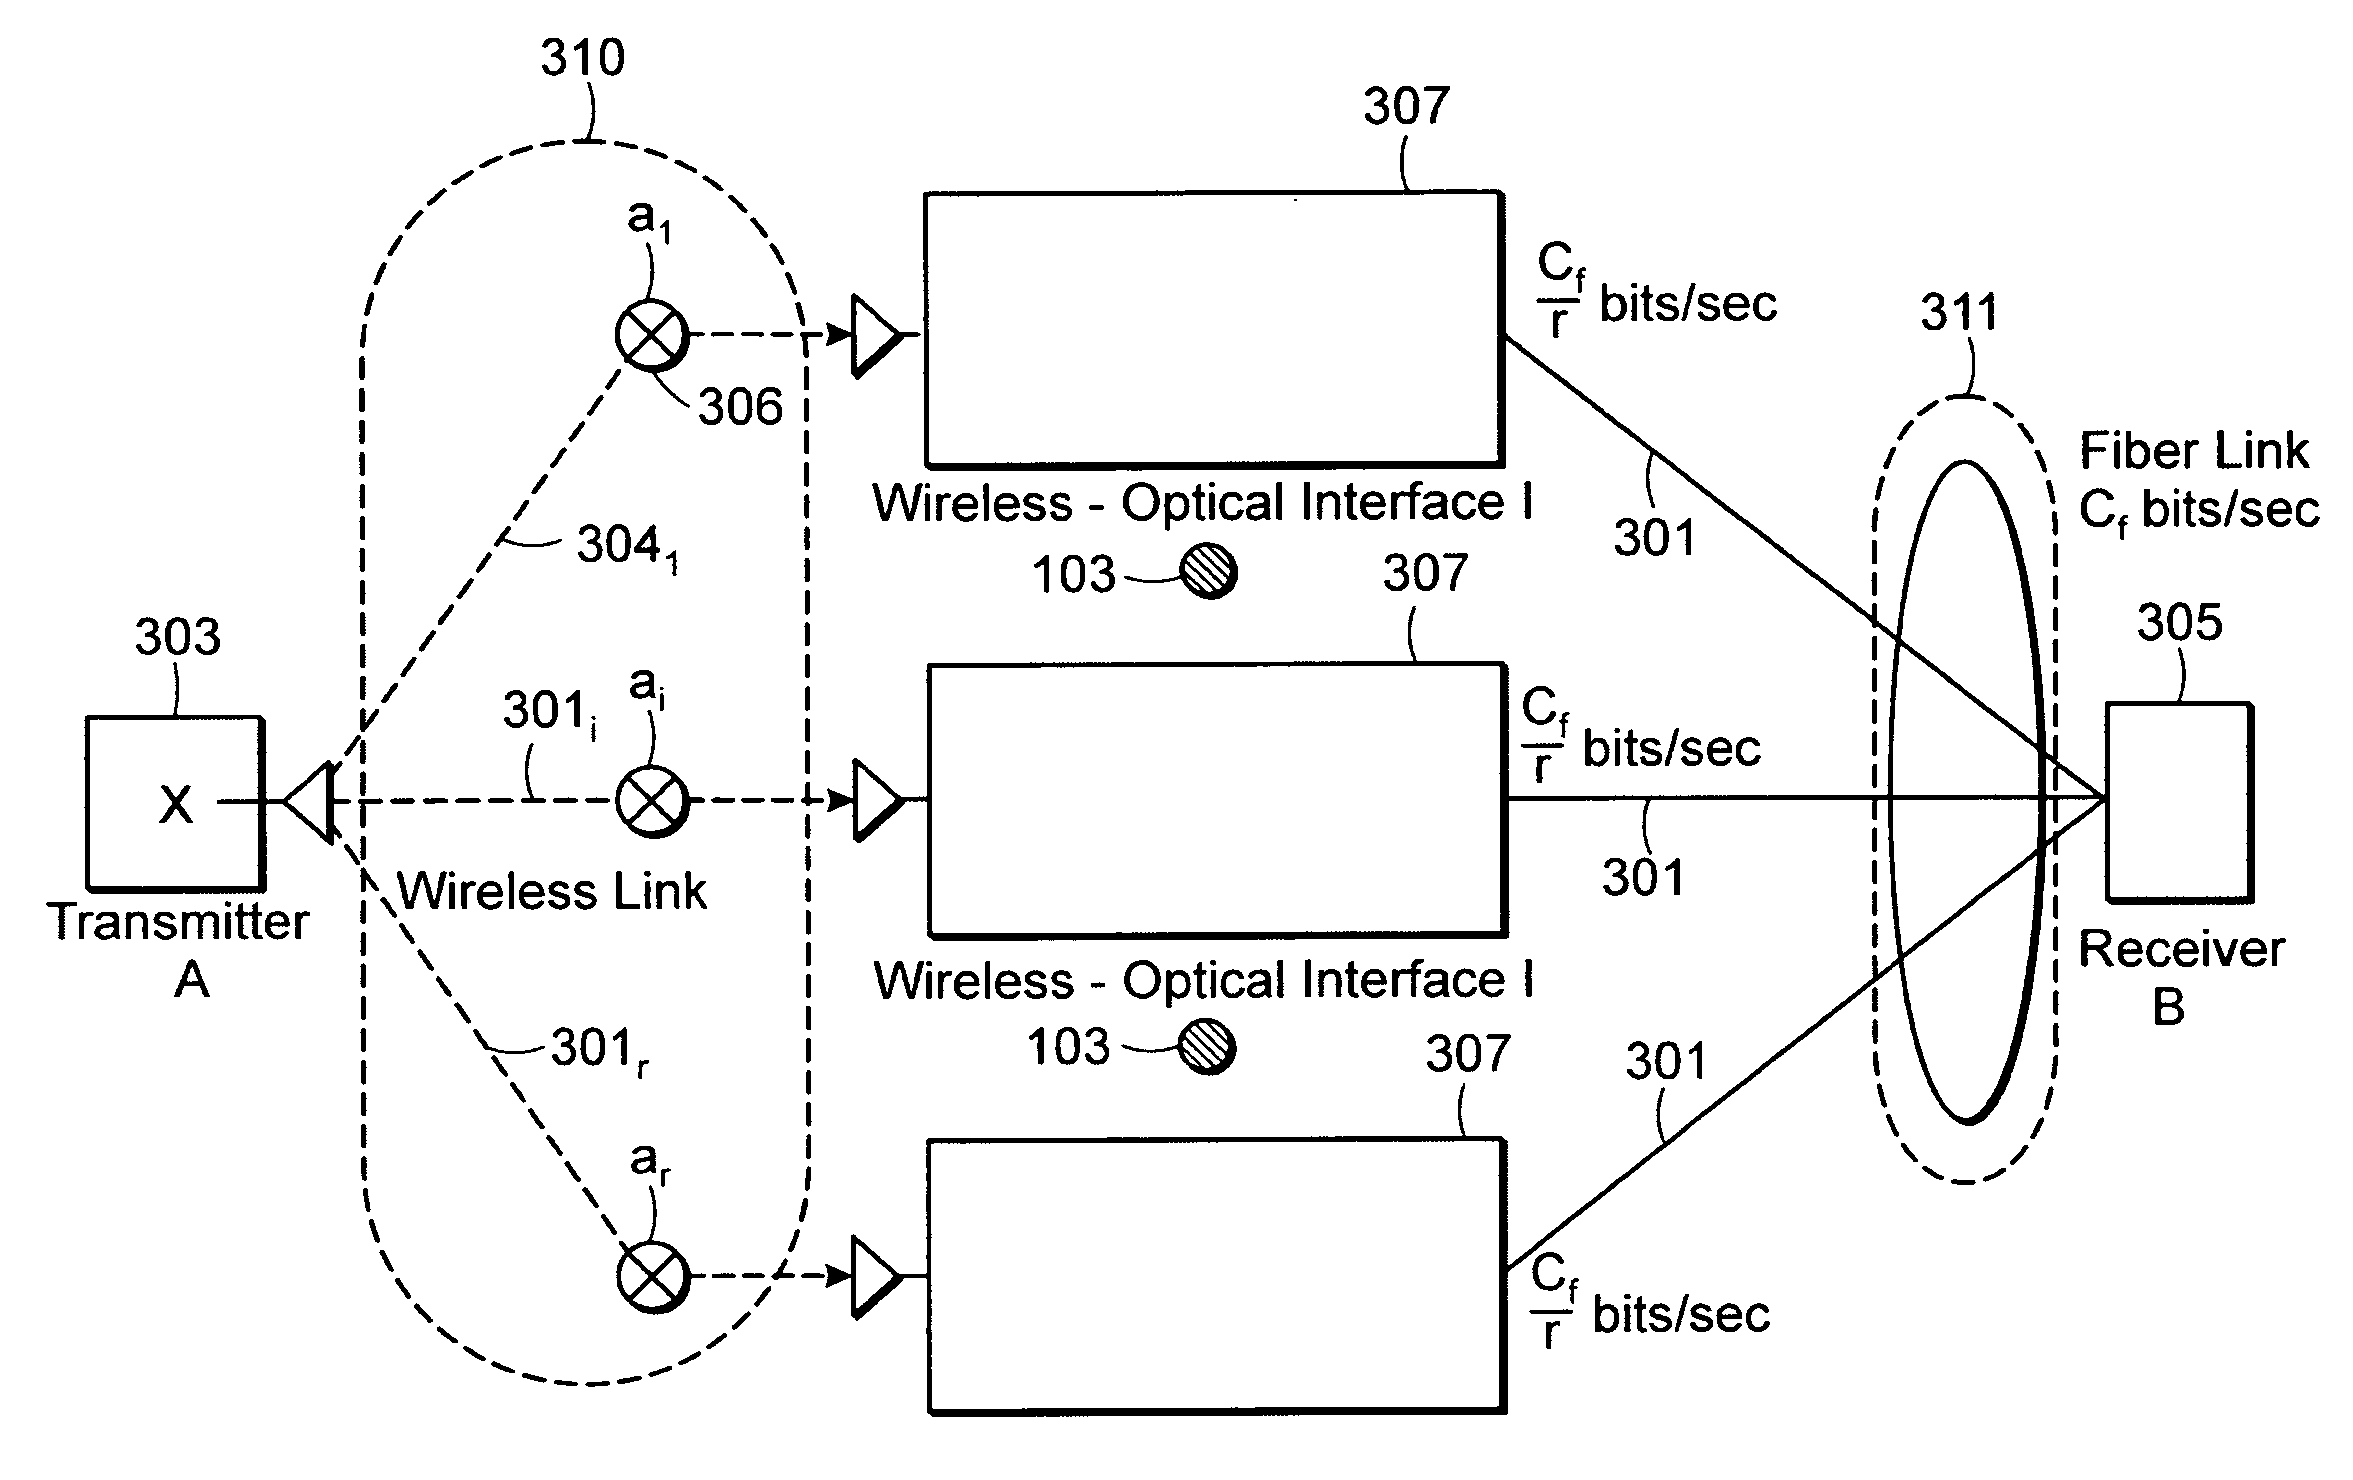 Fiber aided wireless network architecture